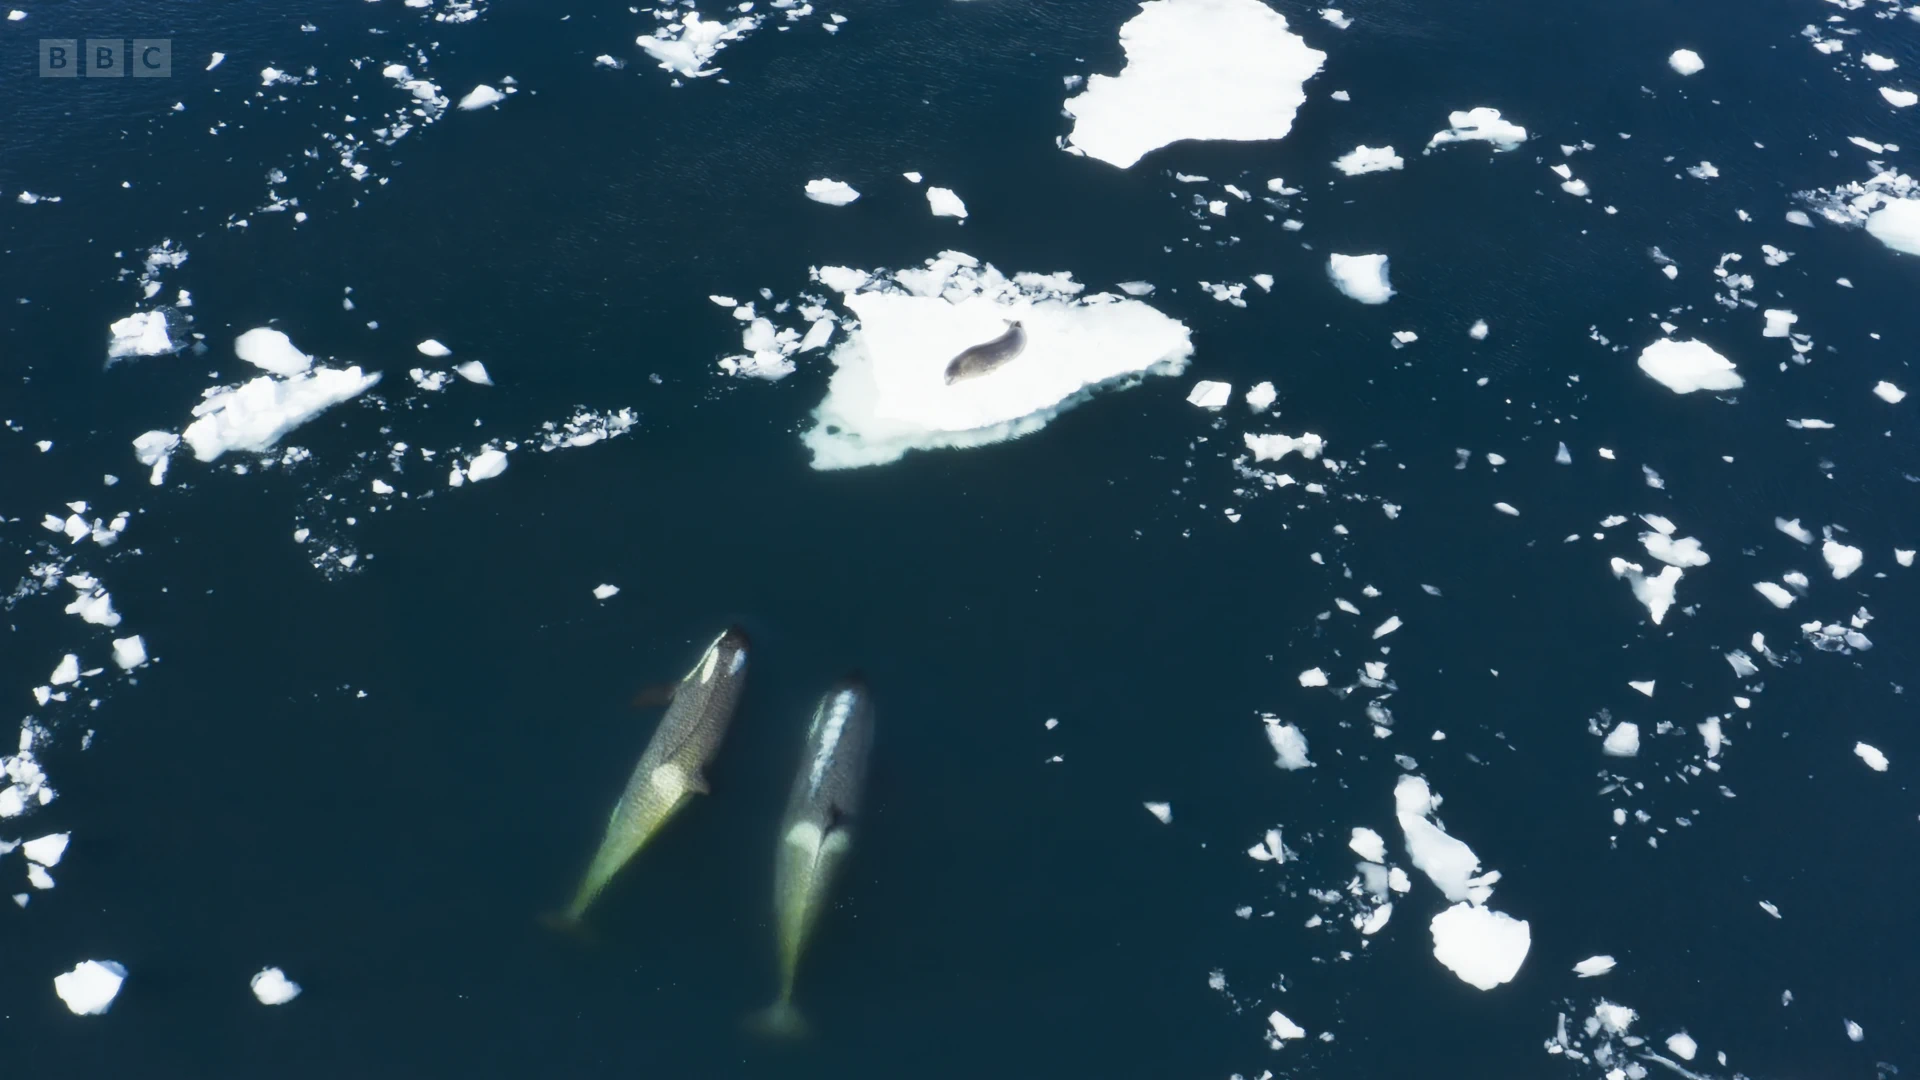 Killer whale (Orcinus orca) as shown in Frozen Planet II - Frozen Worlds